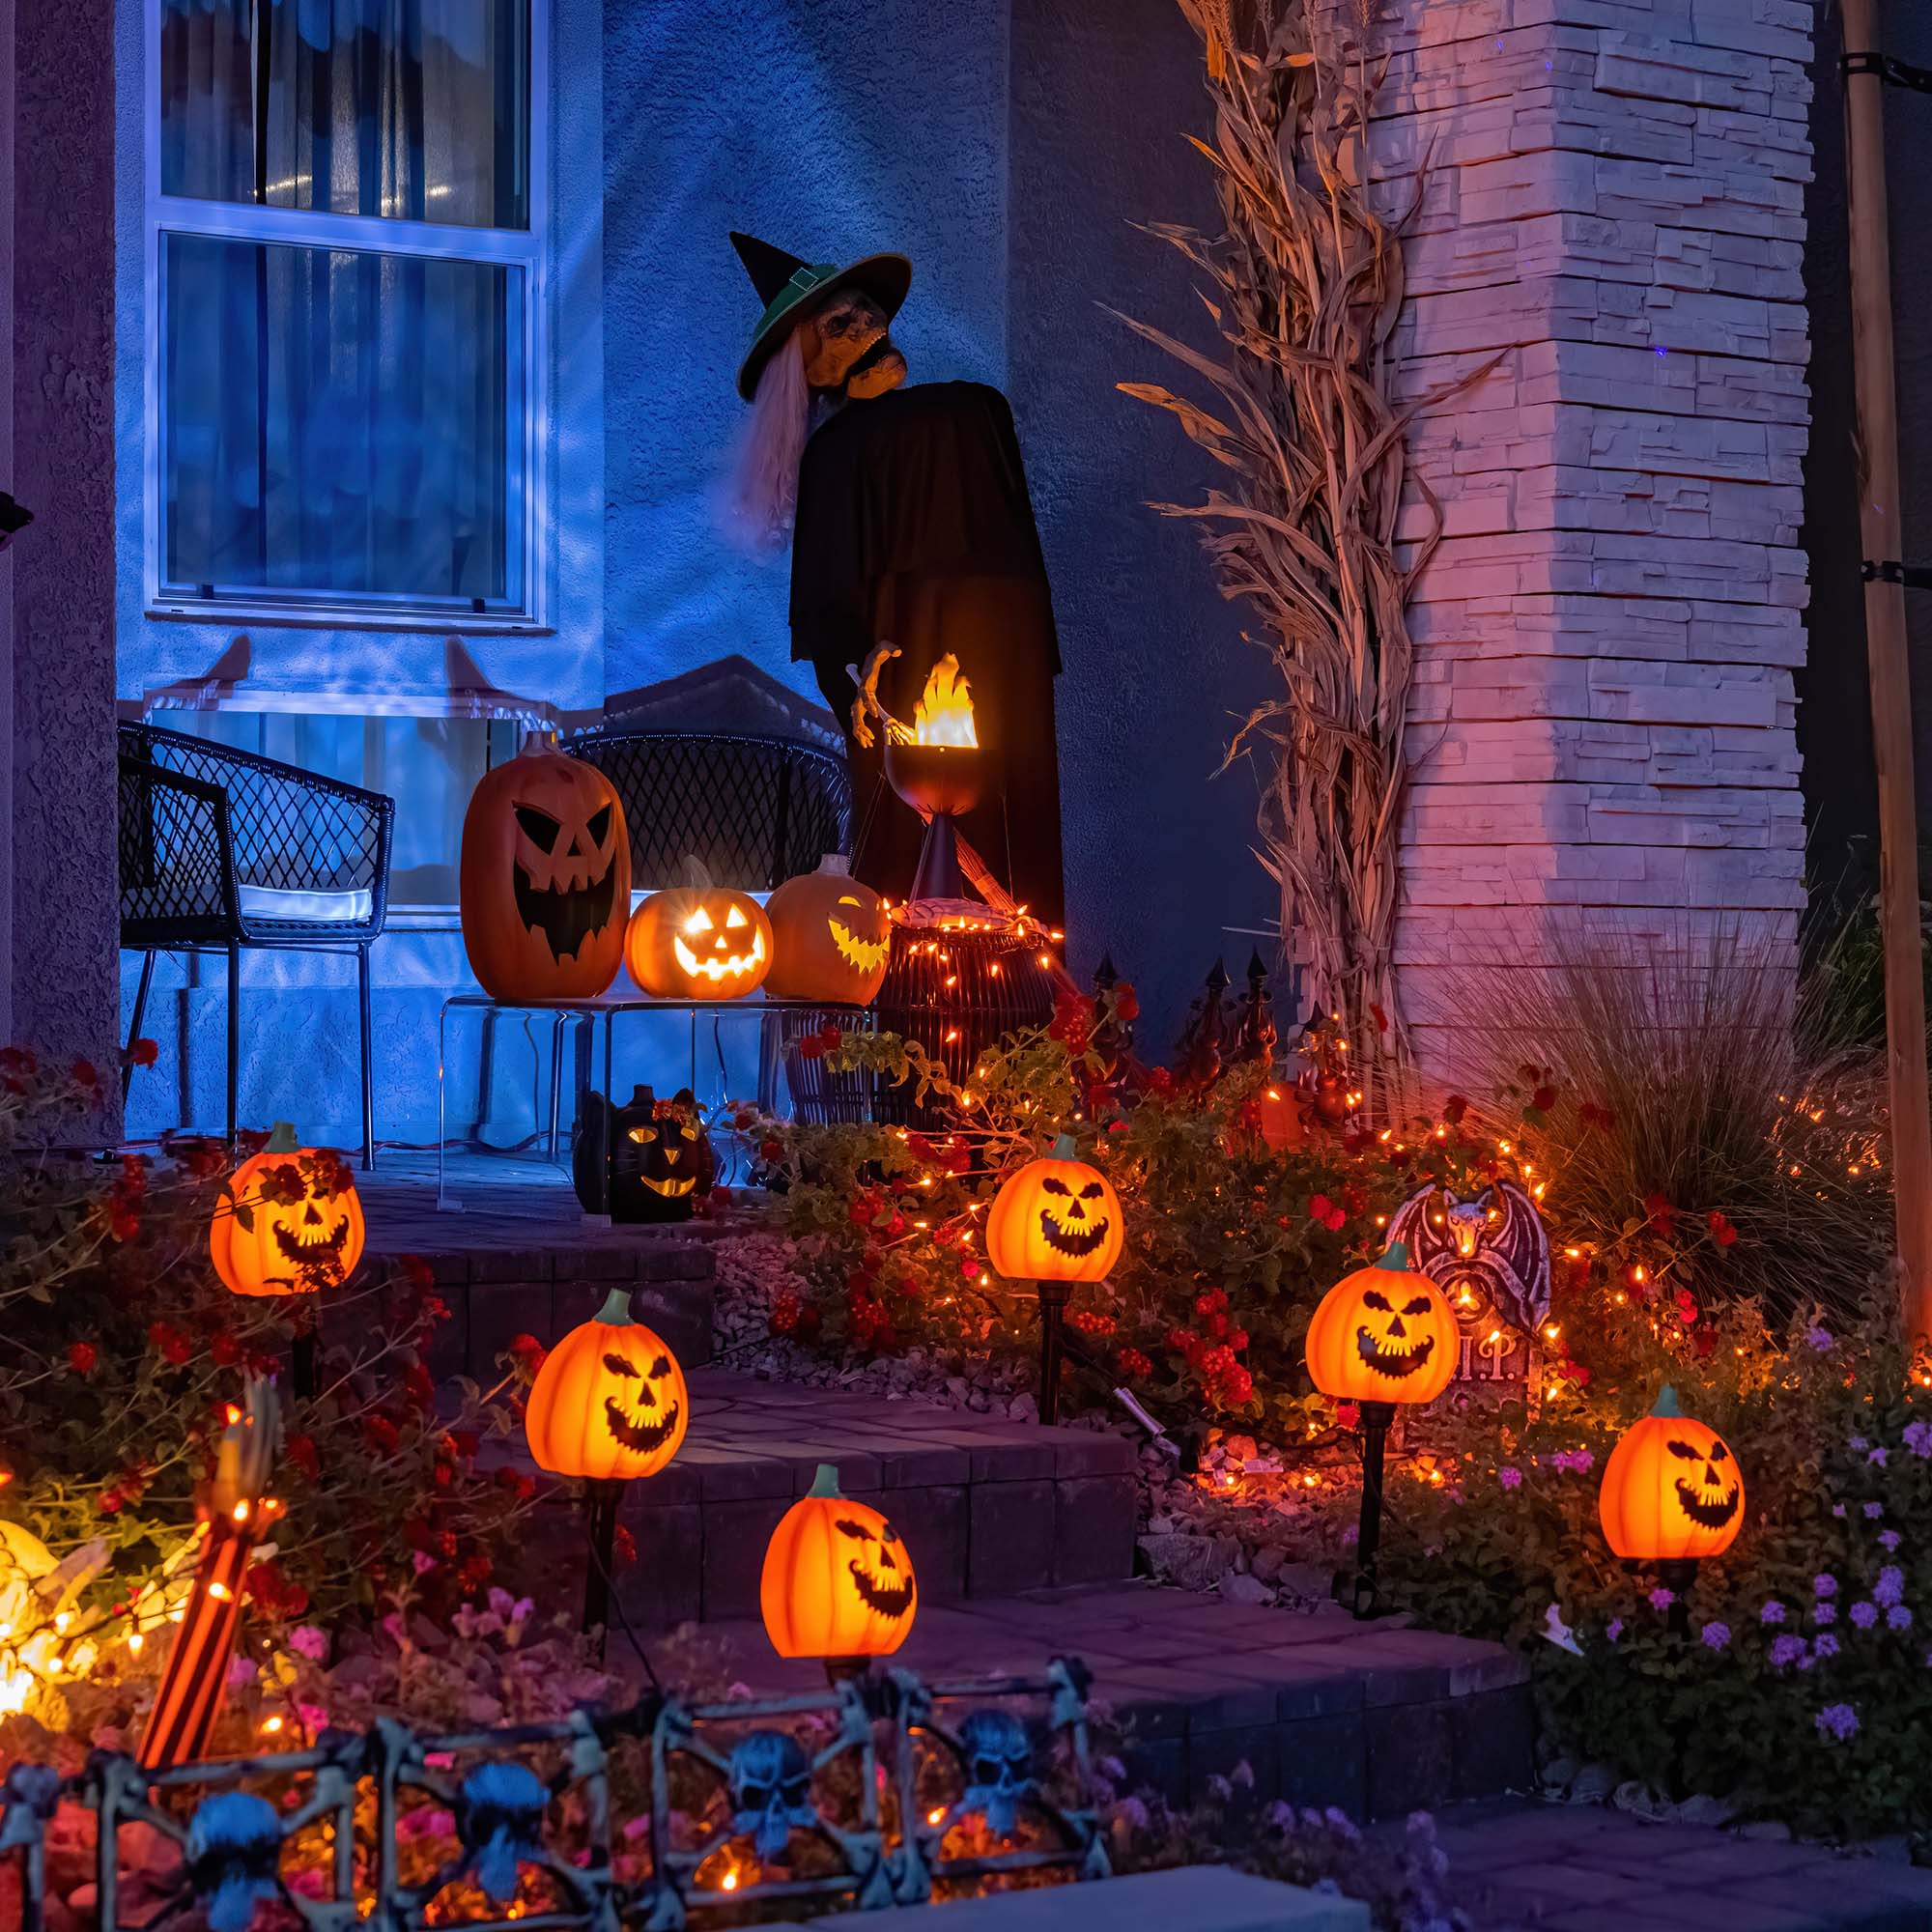 Create Spooky Lighting for an Eerie October